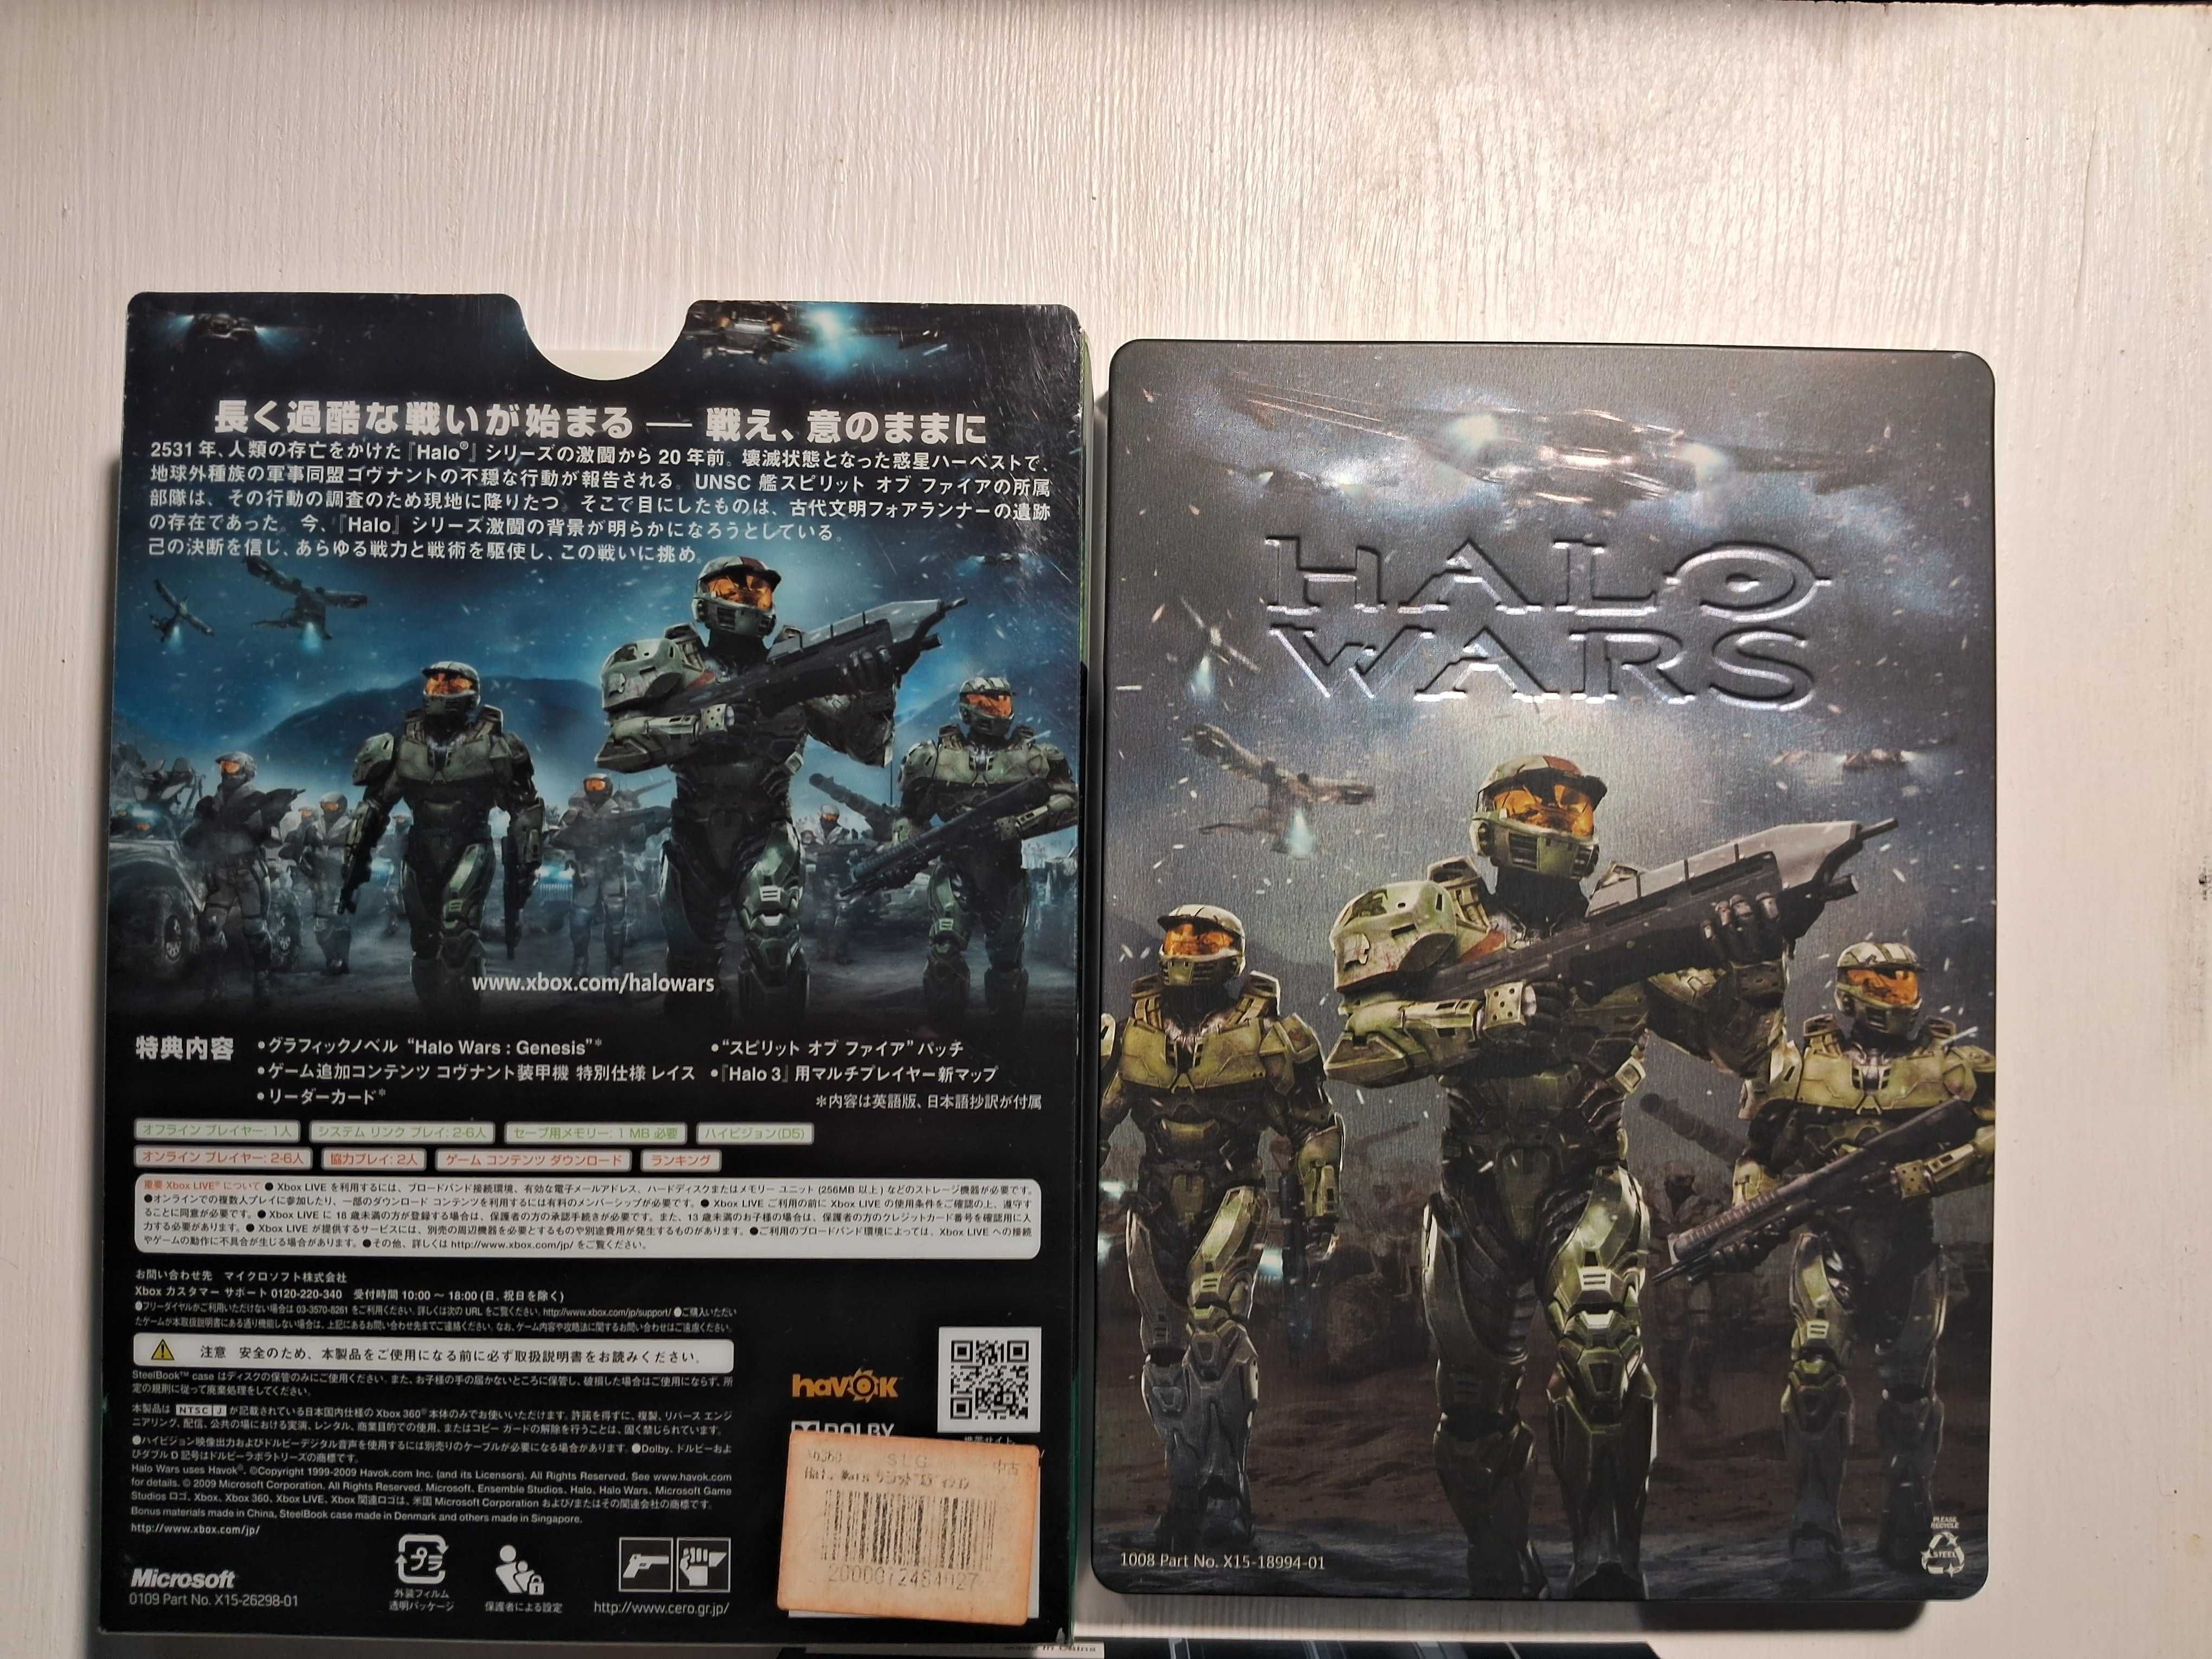 игра Halo Wars limited edition